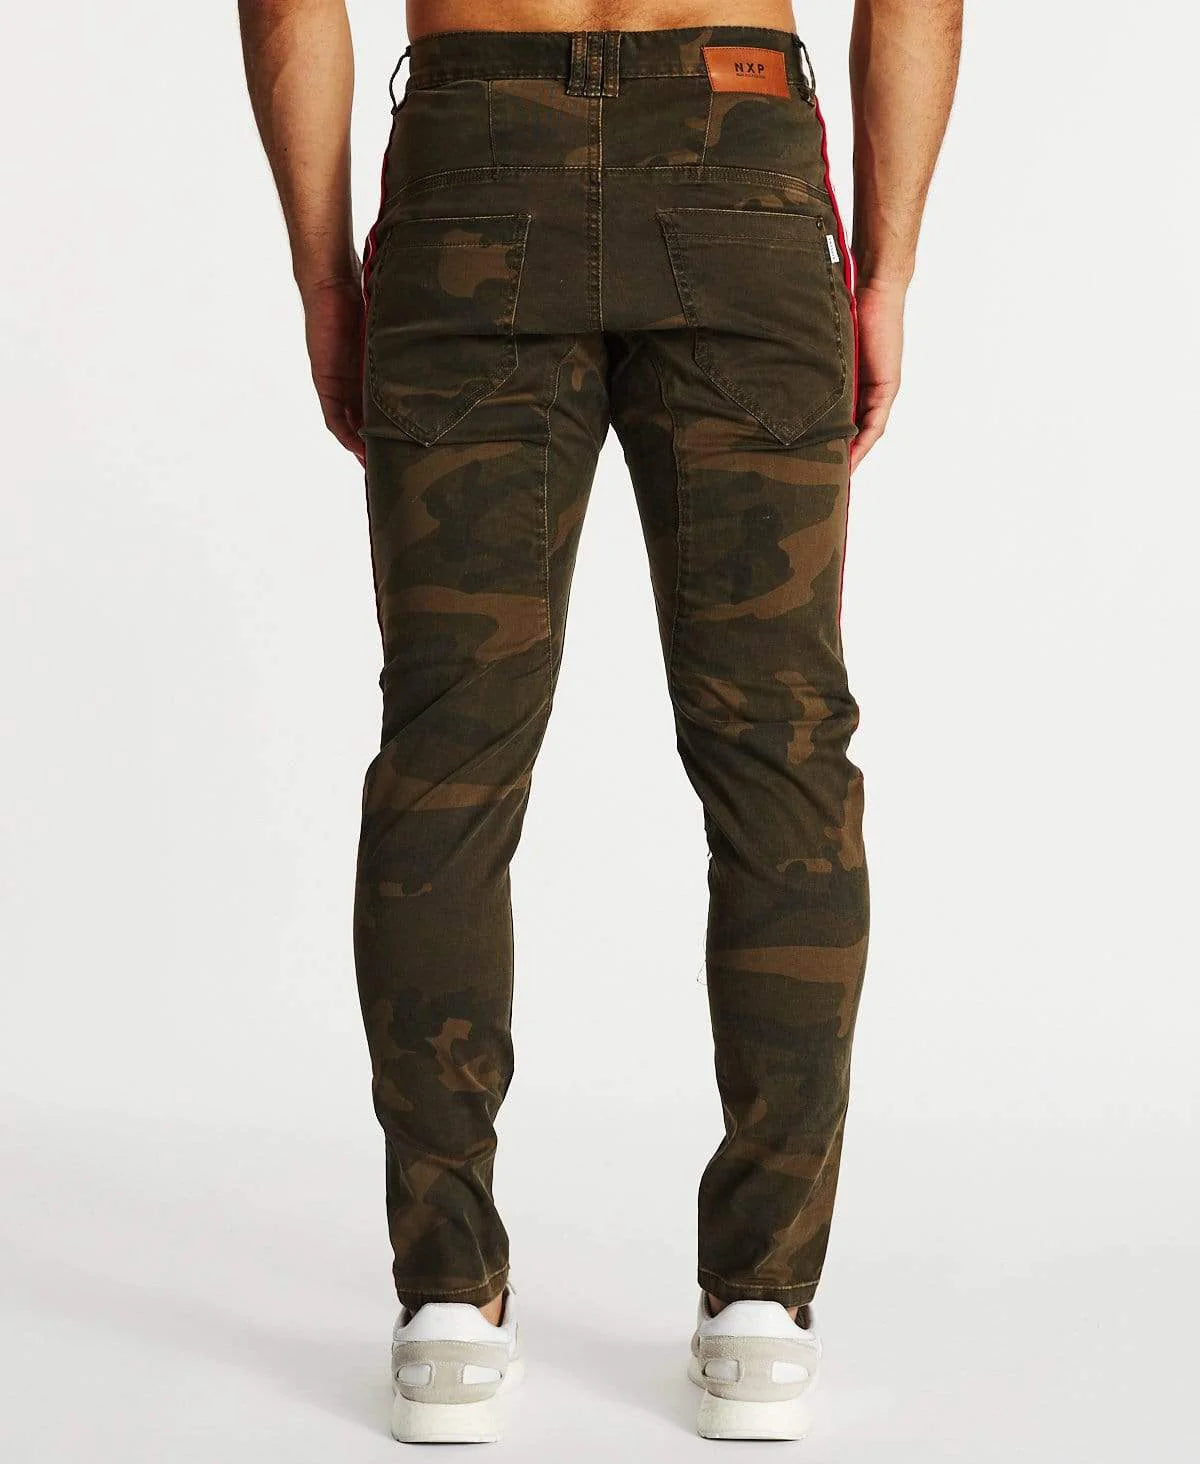 NXP Men's Baseline Camouflage-Print Pants